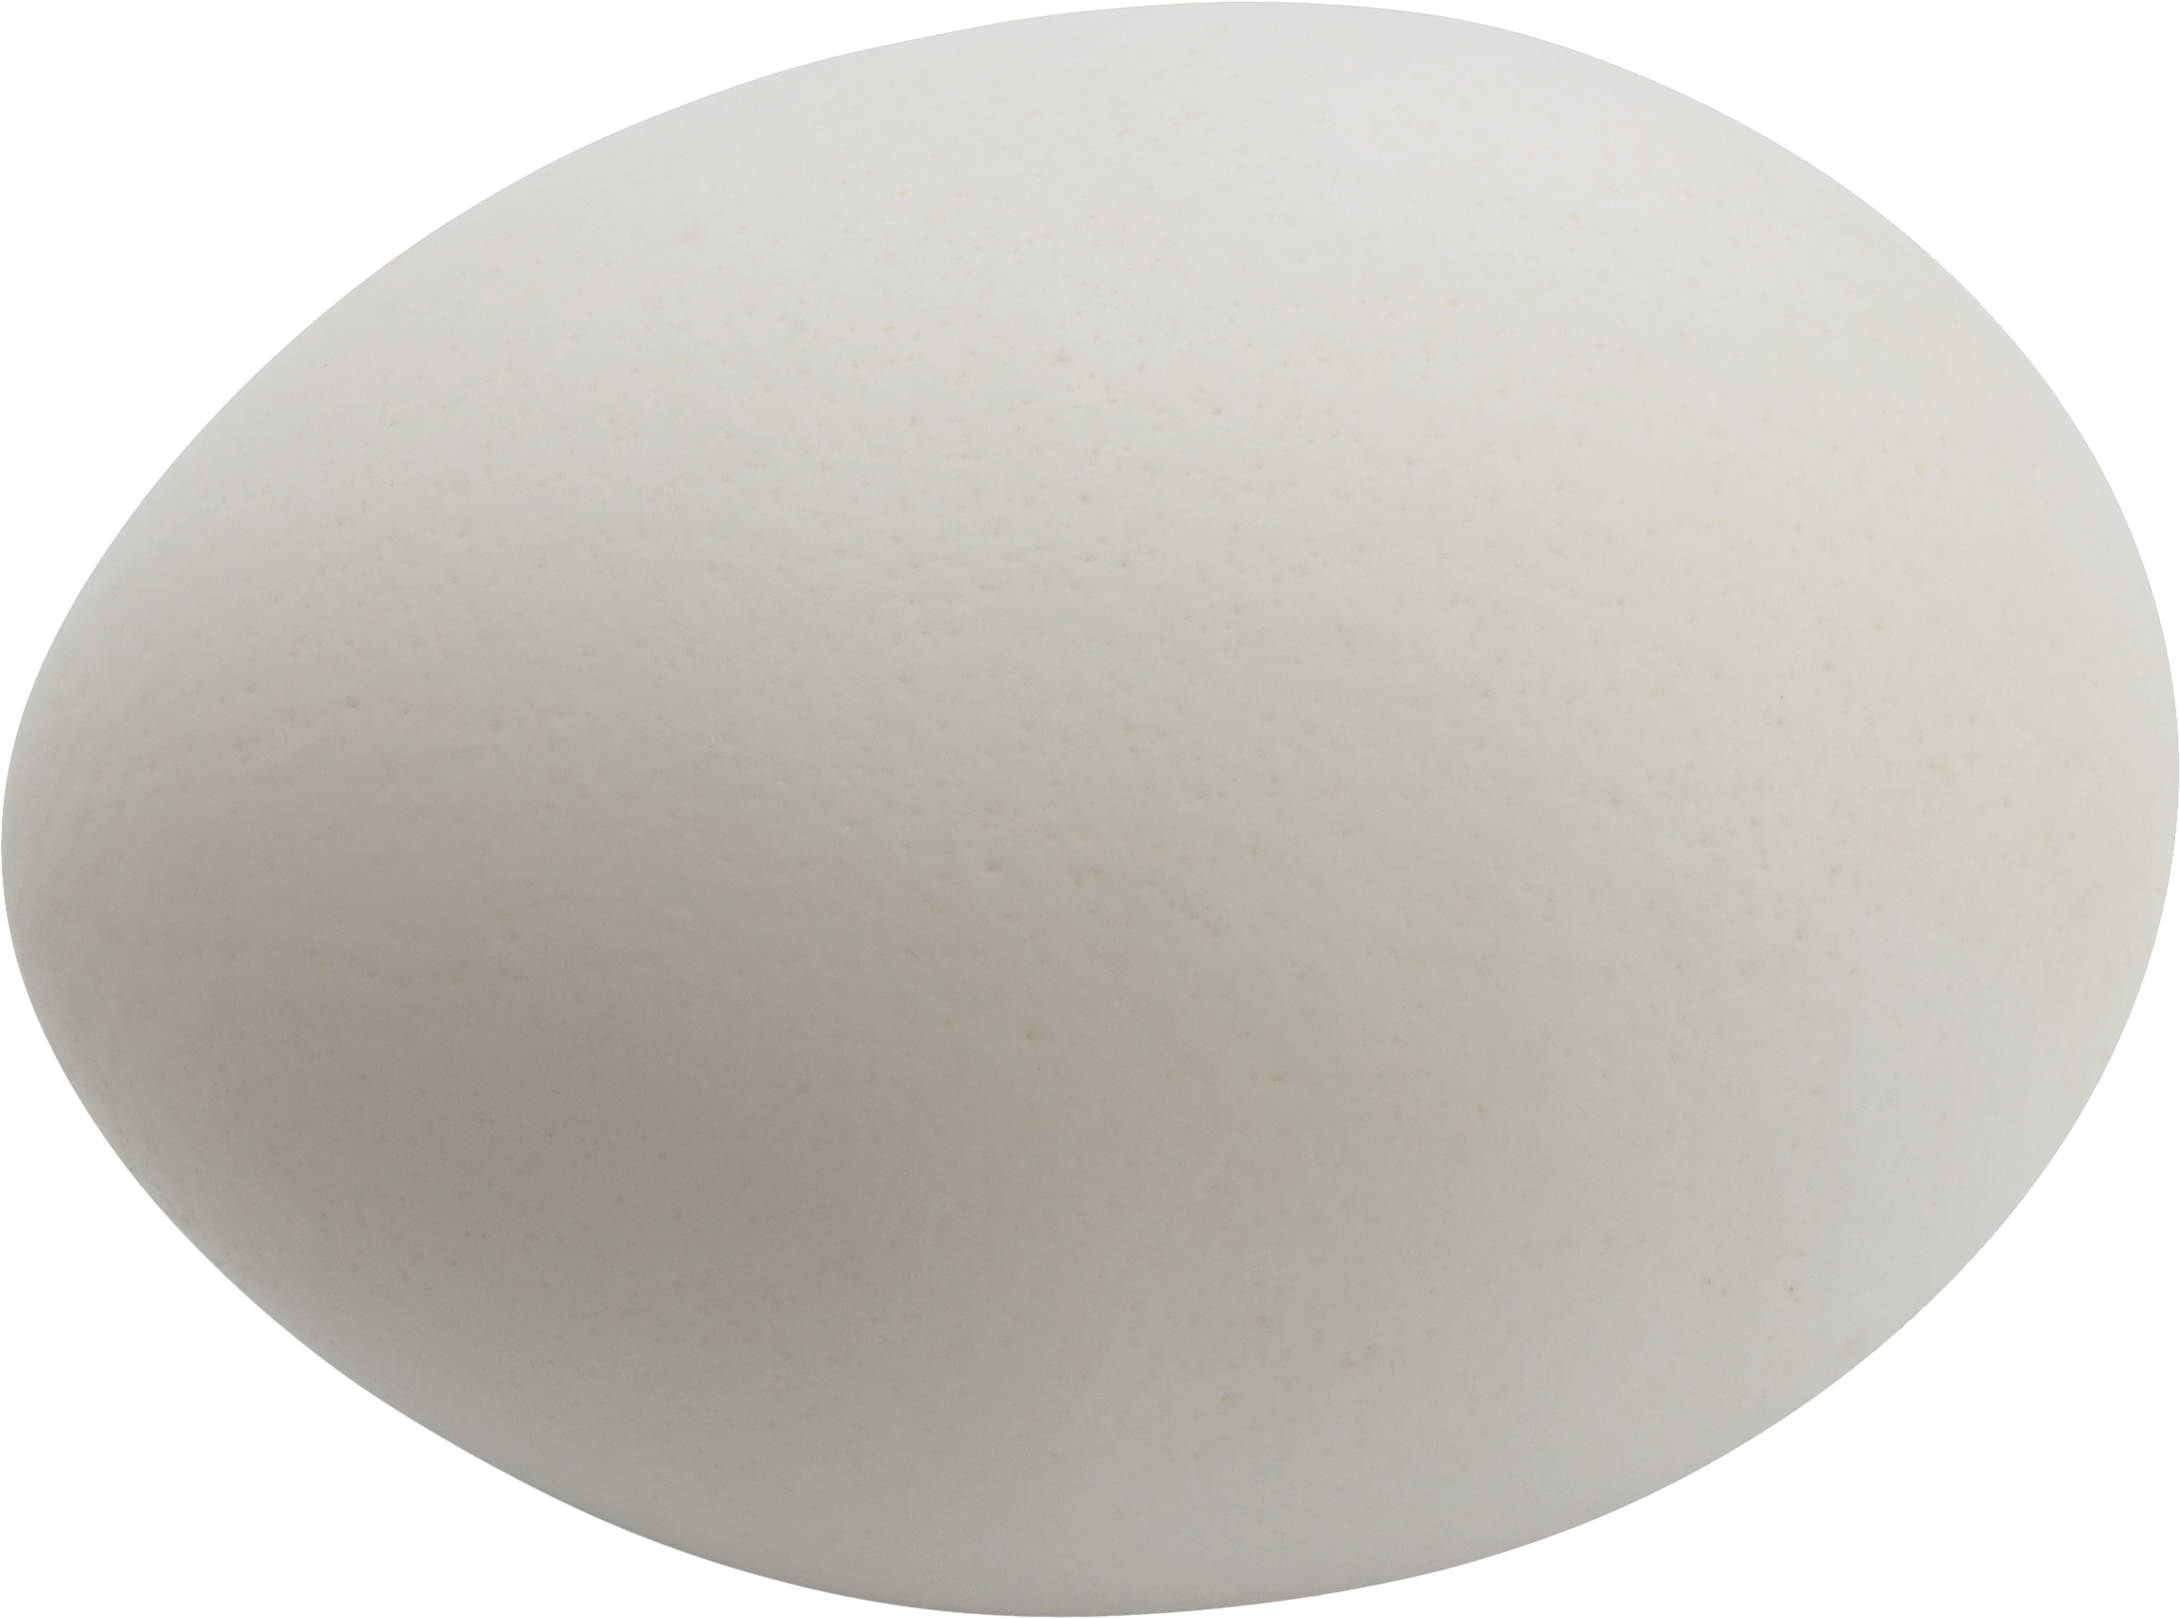 सफेद अंडा